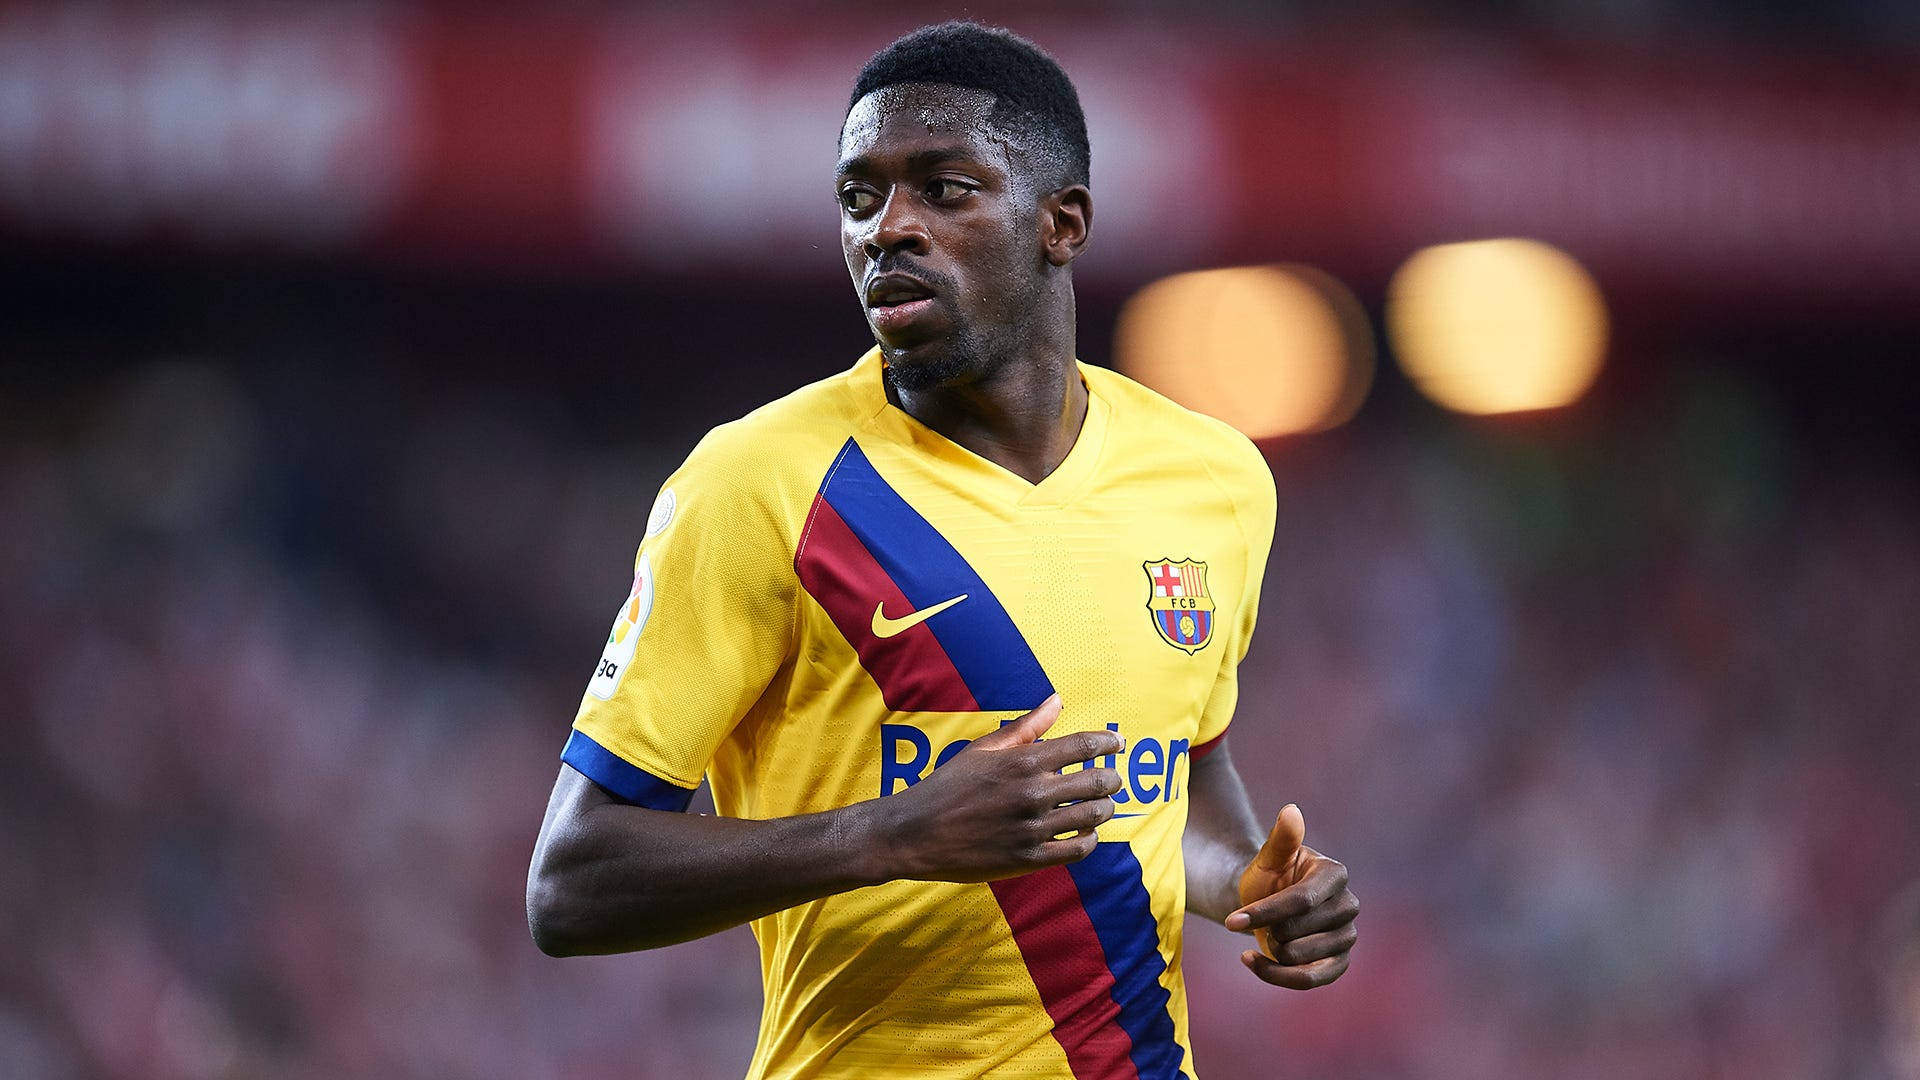 FC Barcelona: Ousmane Dembele strebt angeblich Juventus-Transfer an - Leihe mit Kaufoption?